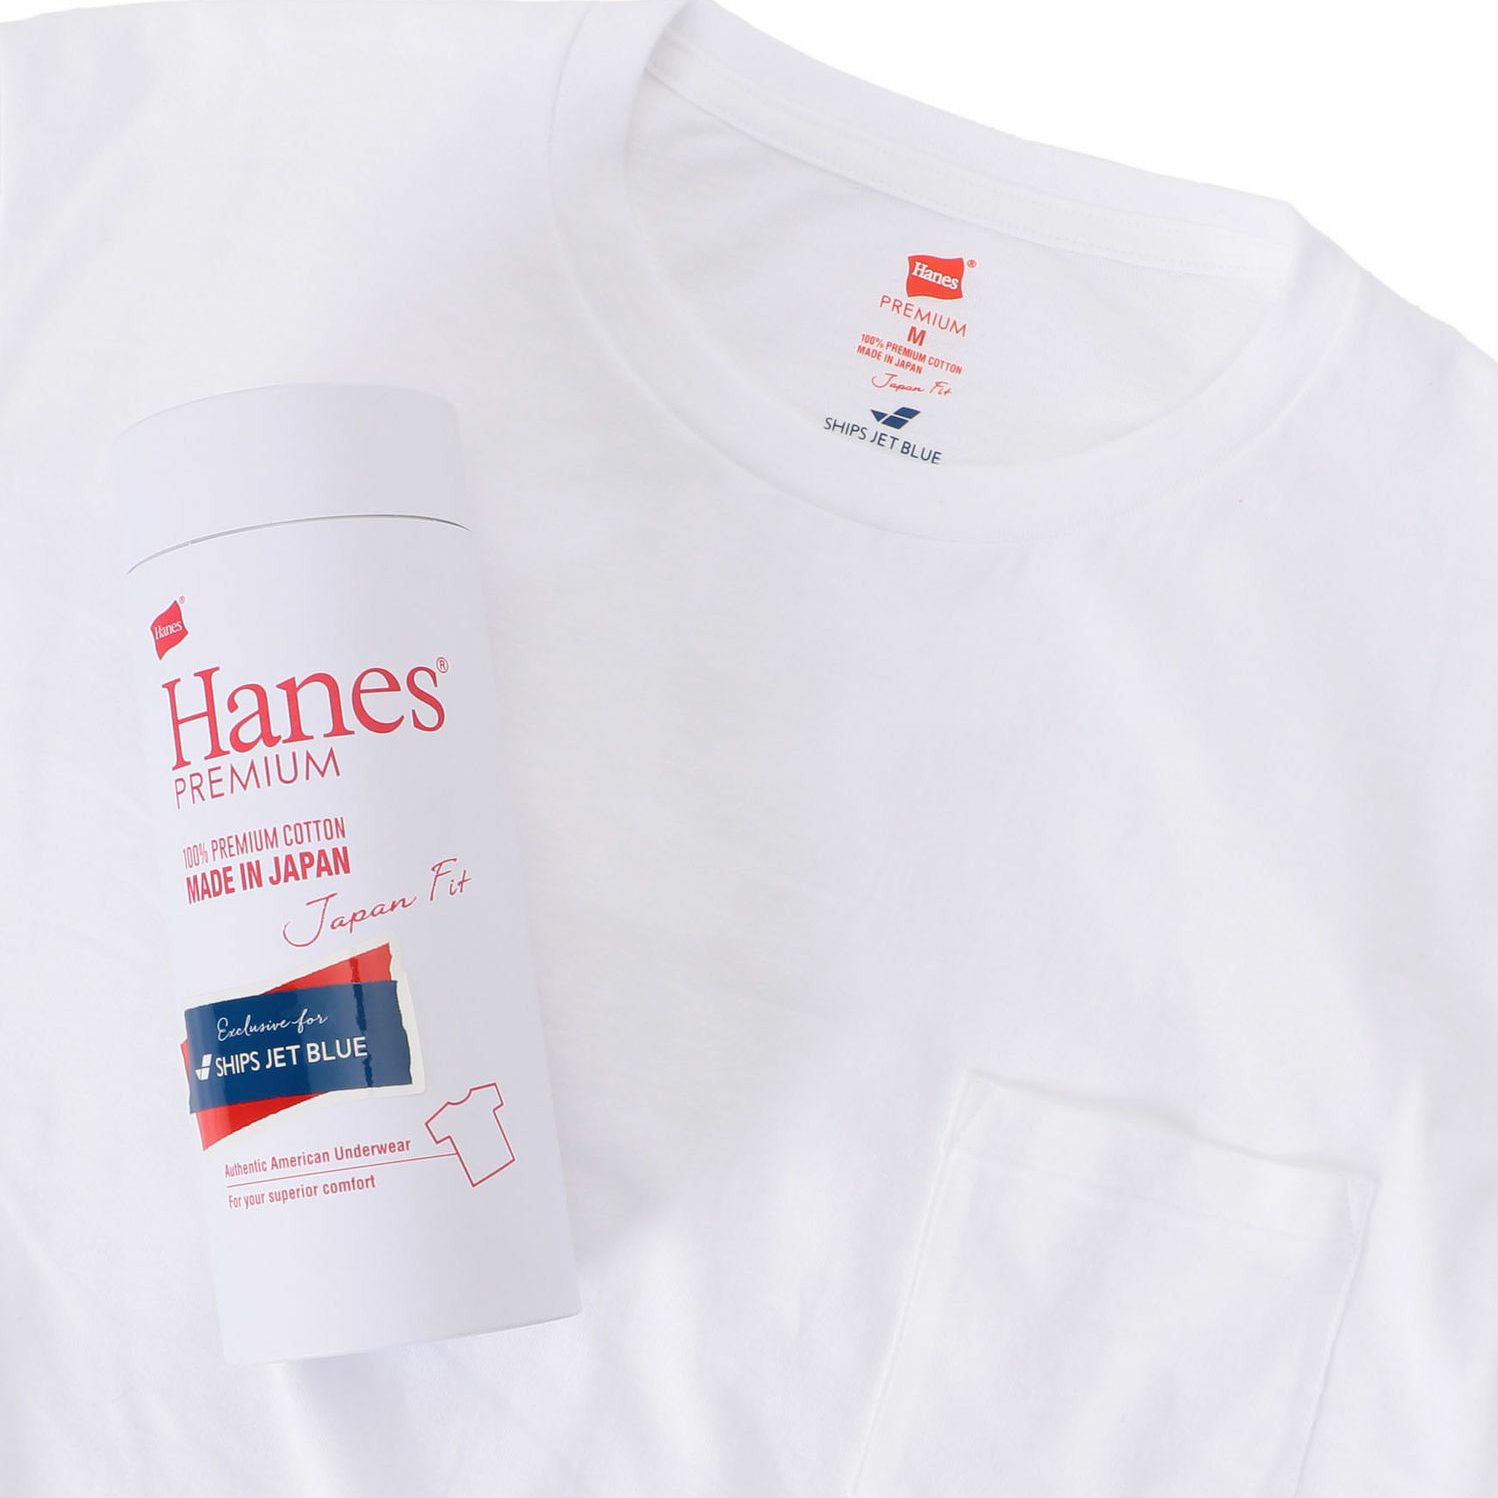 Hanes Ships Jet Blue 別注 ジャパンフィット ポケット付 Tシャツが新登場 Japan Fit